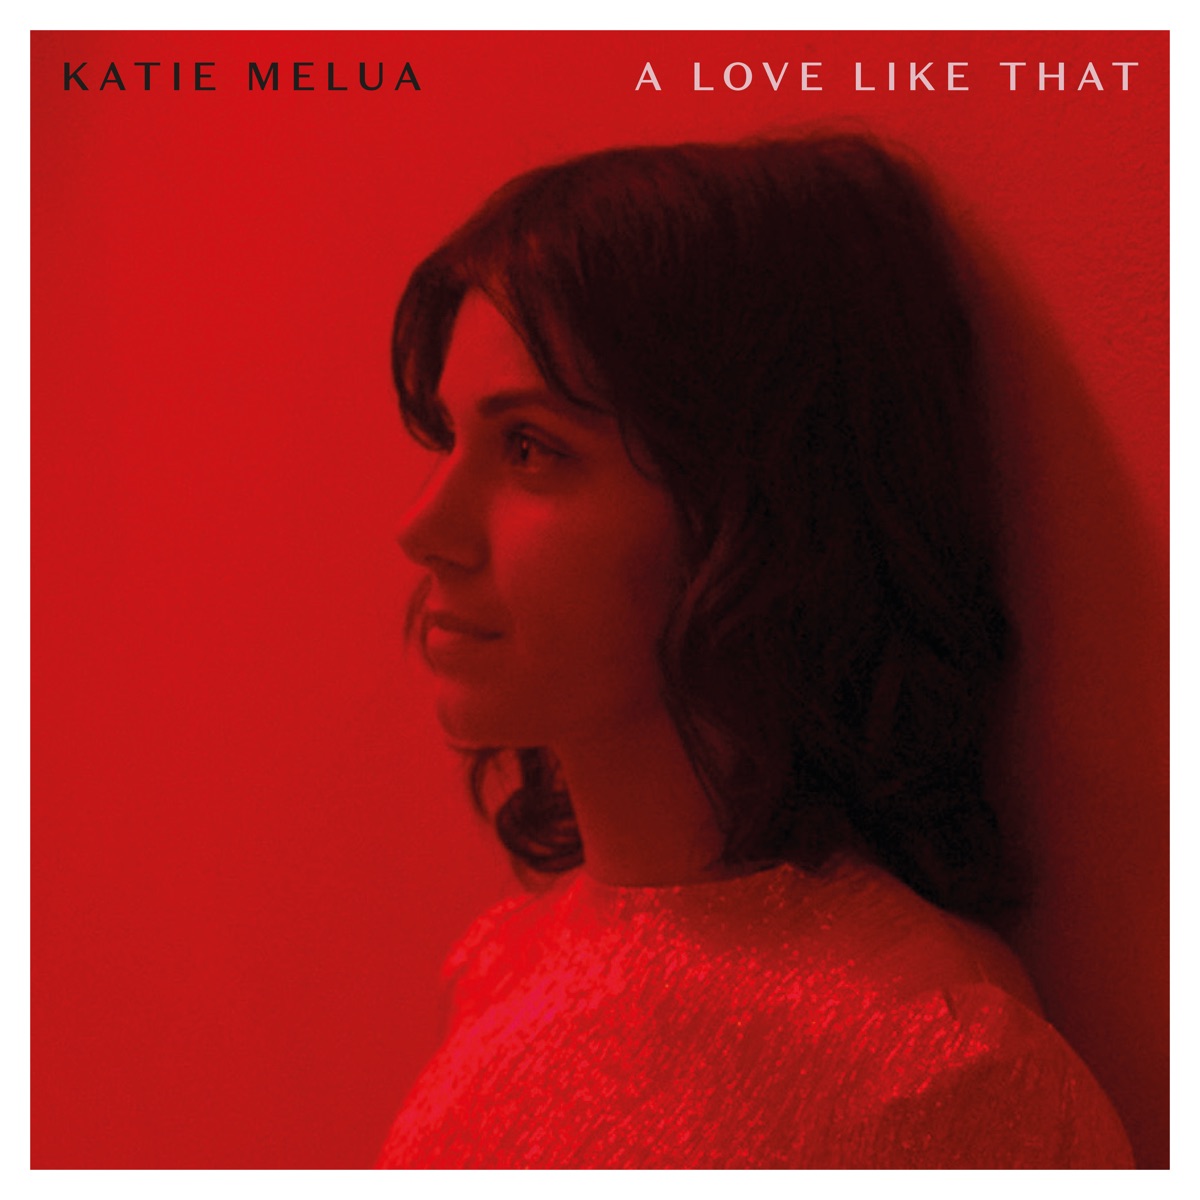 Kilometers Algebra Versnellen The House by Katie Melua on Apple Music